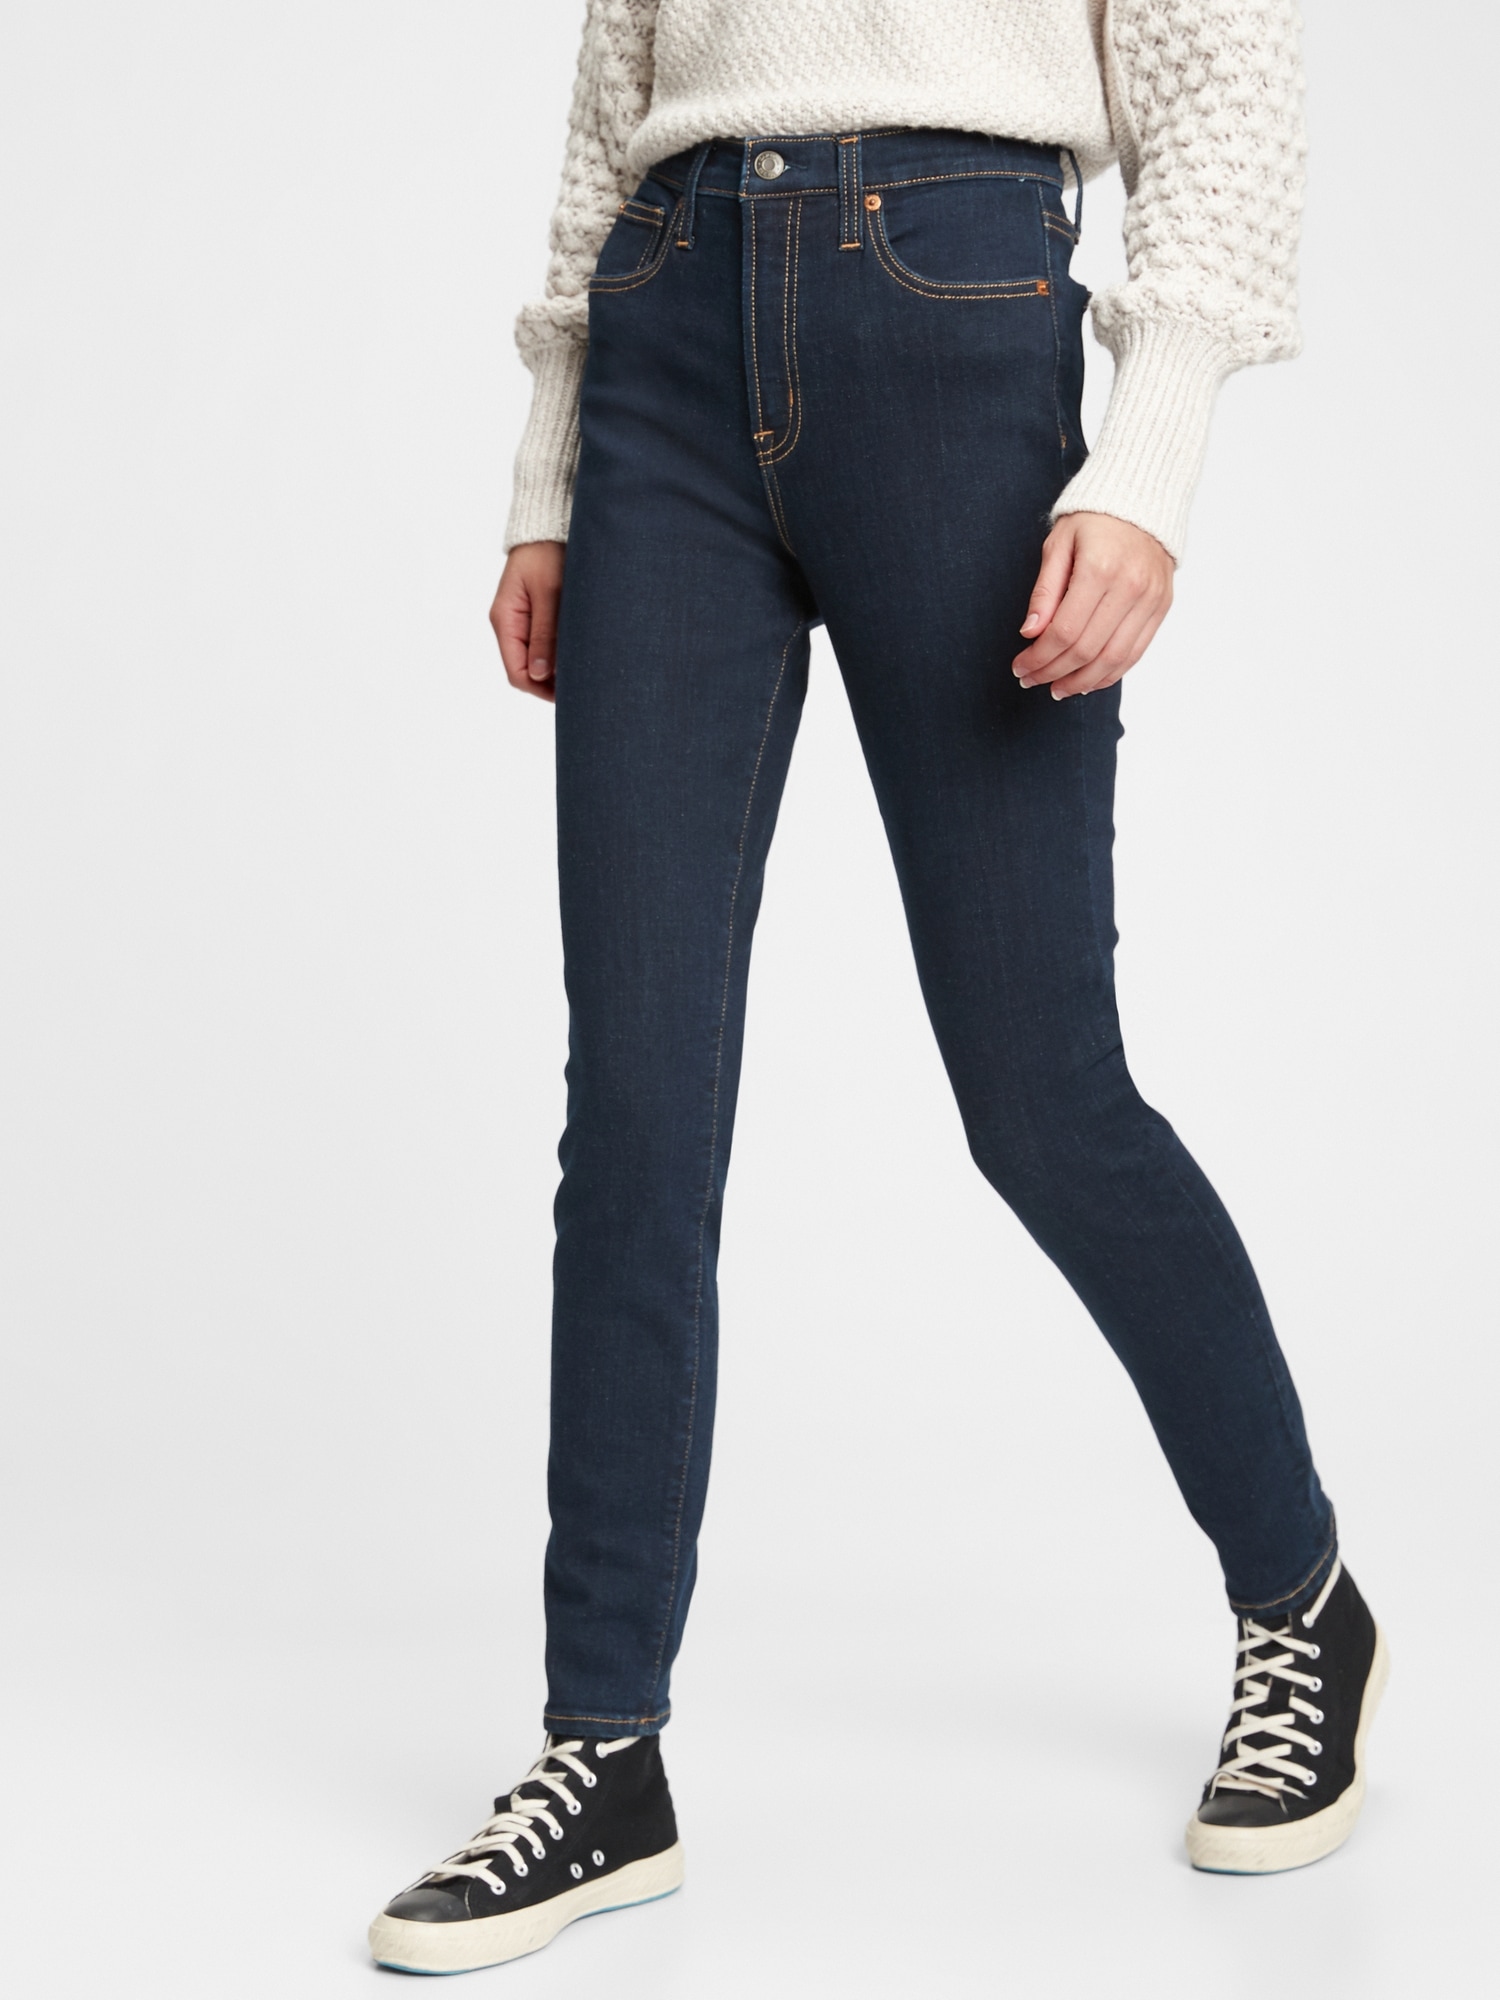 gap high rise true skinny jeans